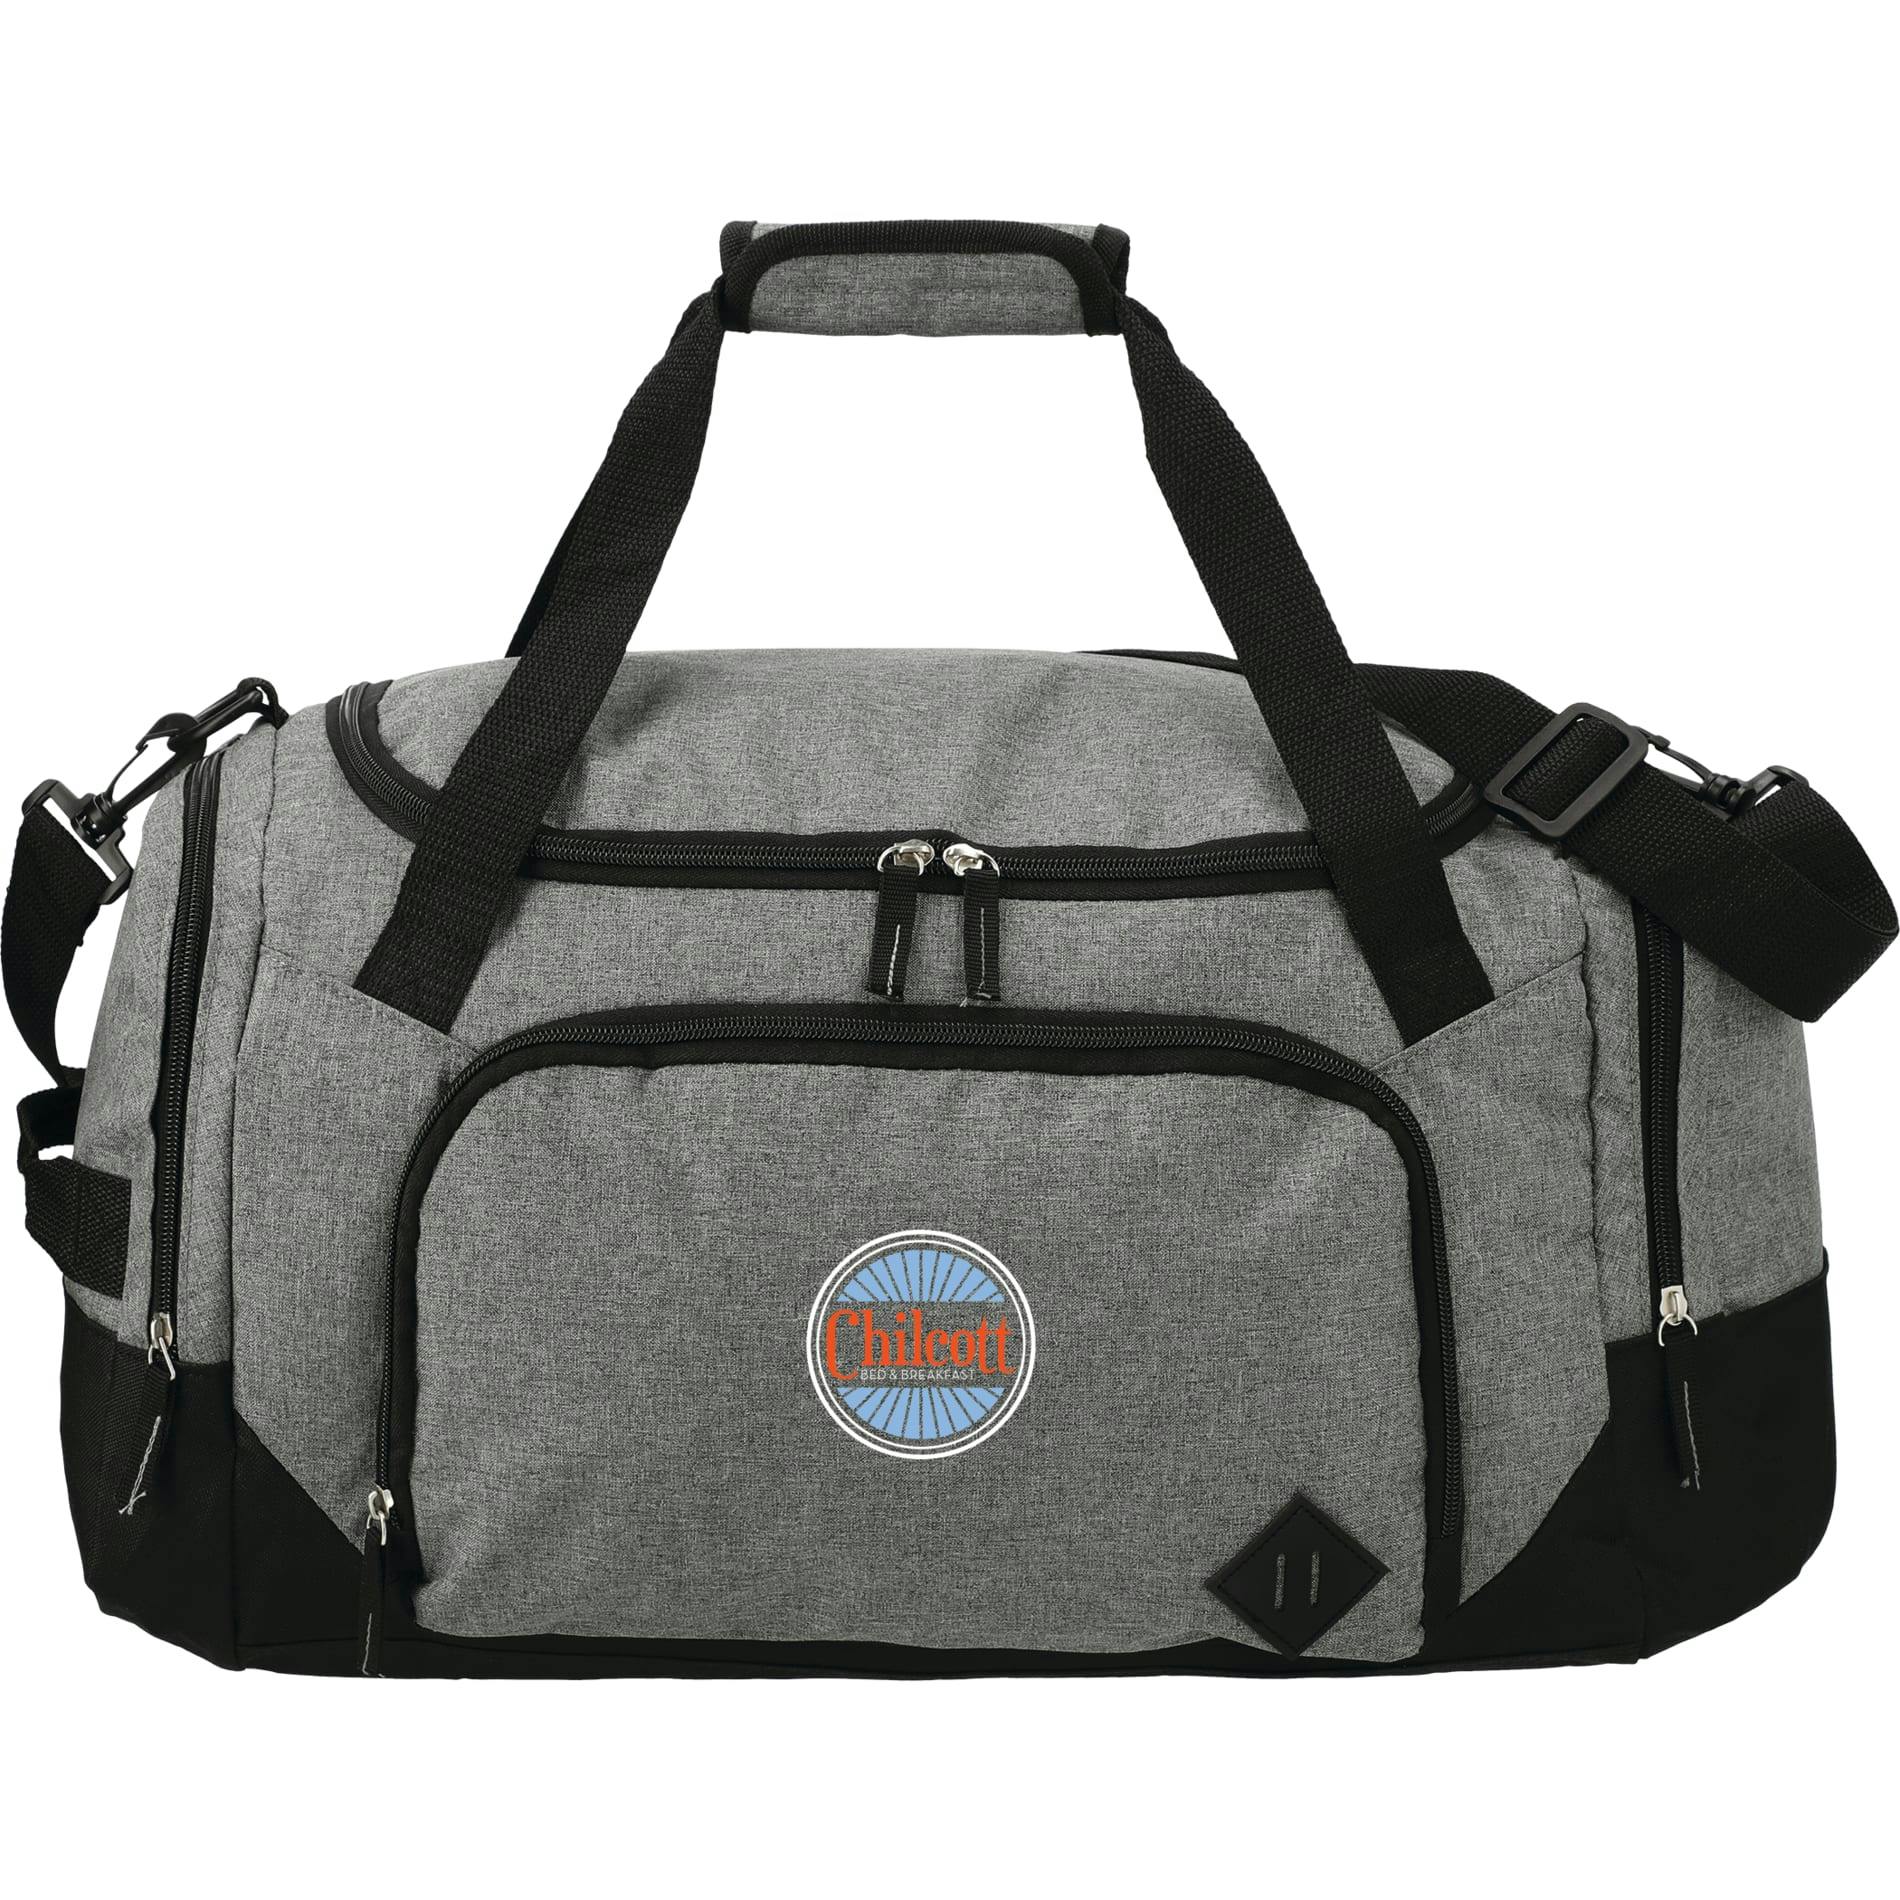 Graphite 21" Weekender Duffel Bag - additional Image 2